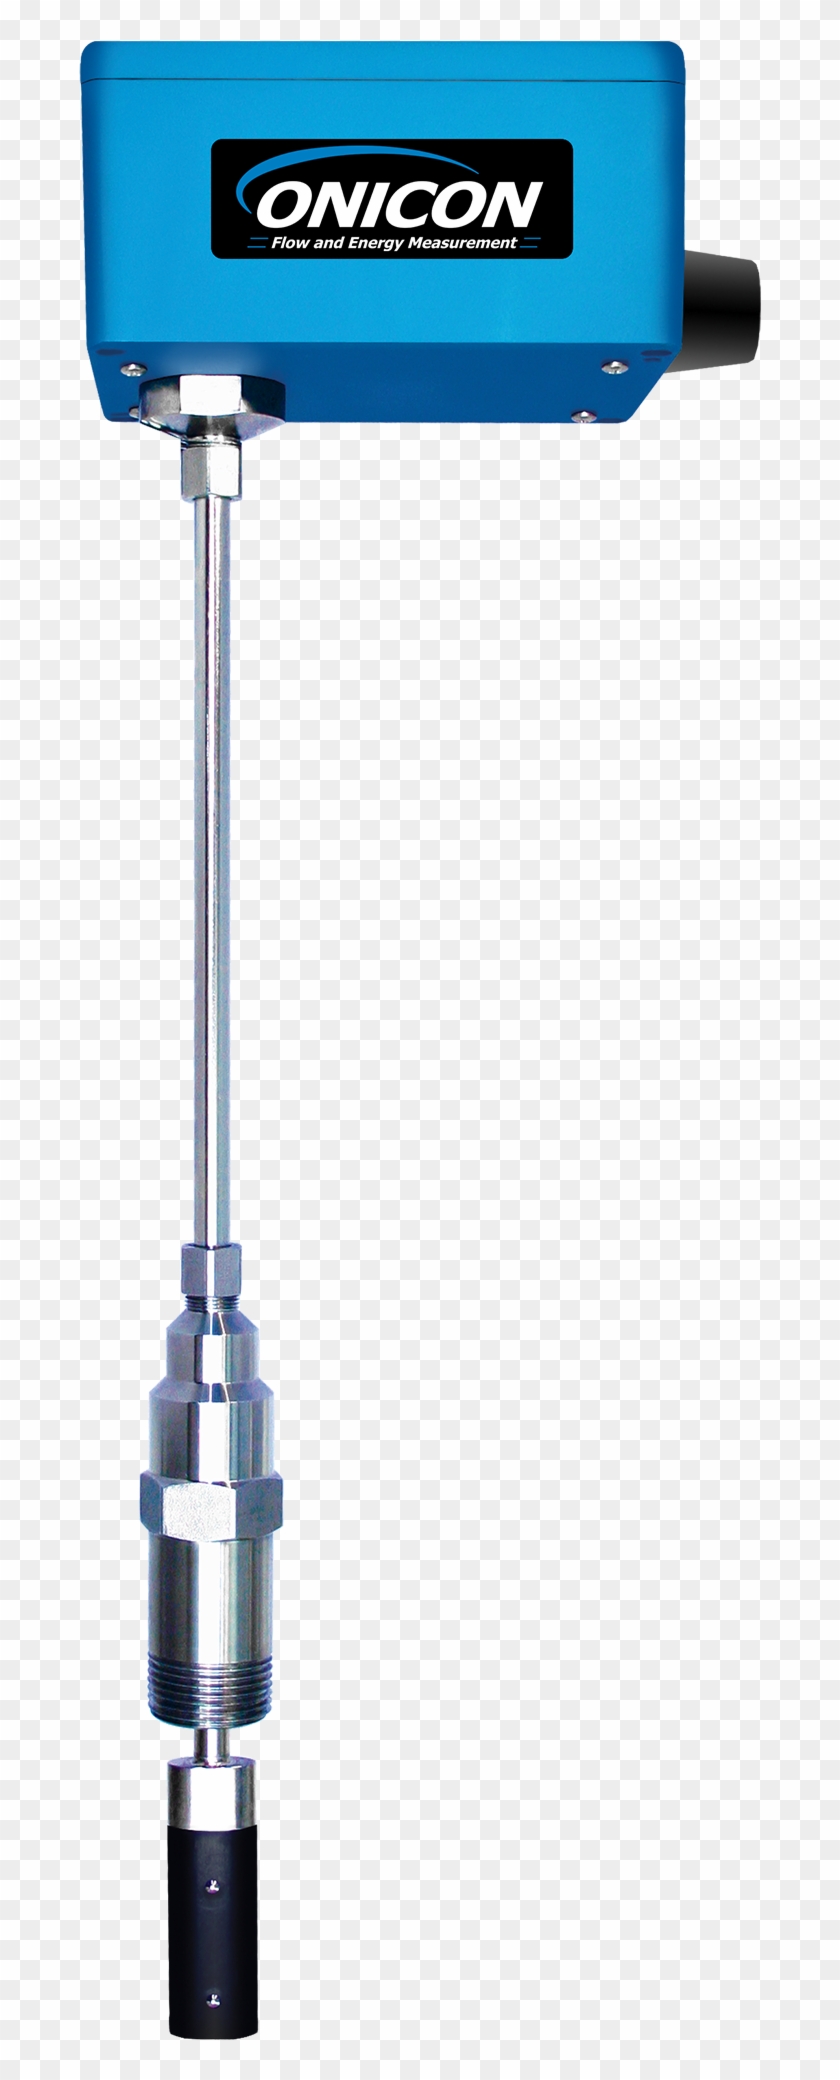 F-3500 Series Insertion Electromagnetic Flow Meter - Onicon Fb 3500 Insertion Electromagnetic Flow Meter Clipart #3689055